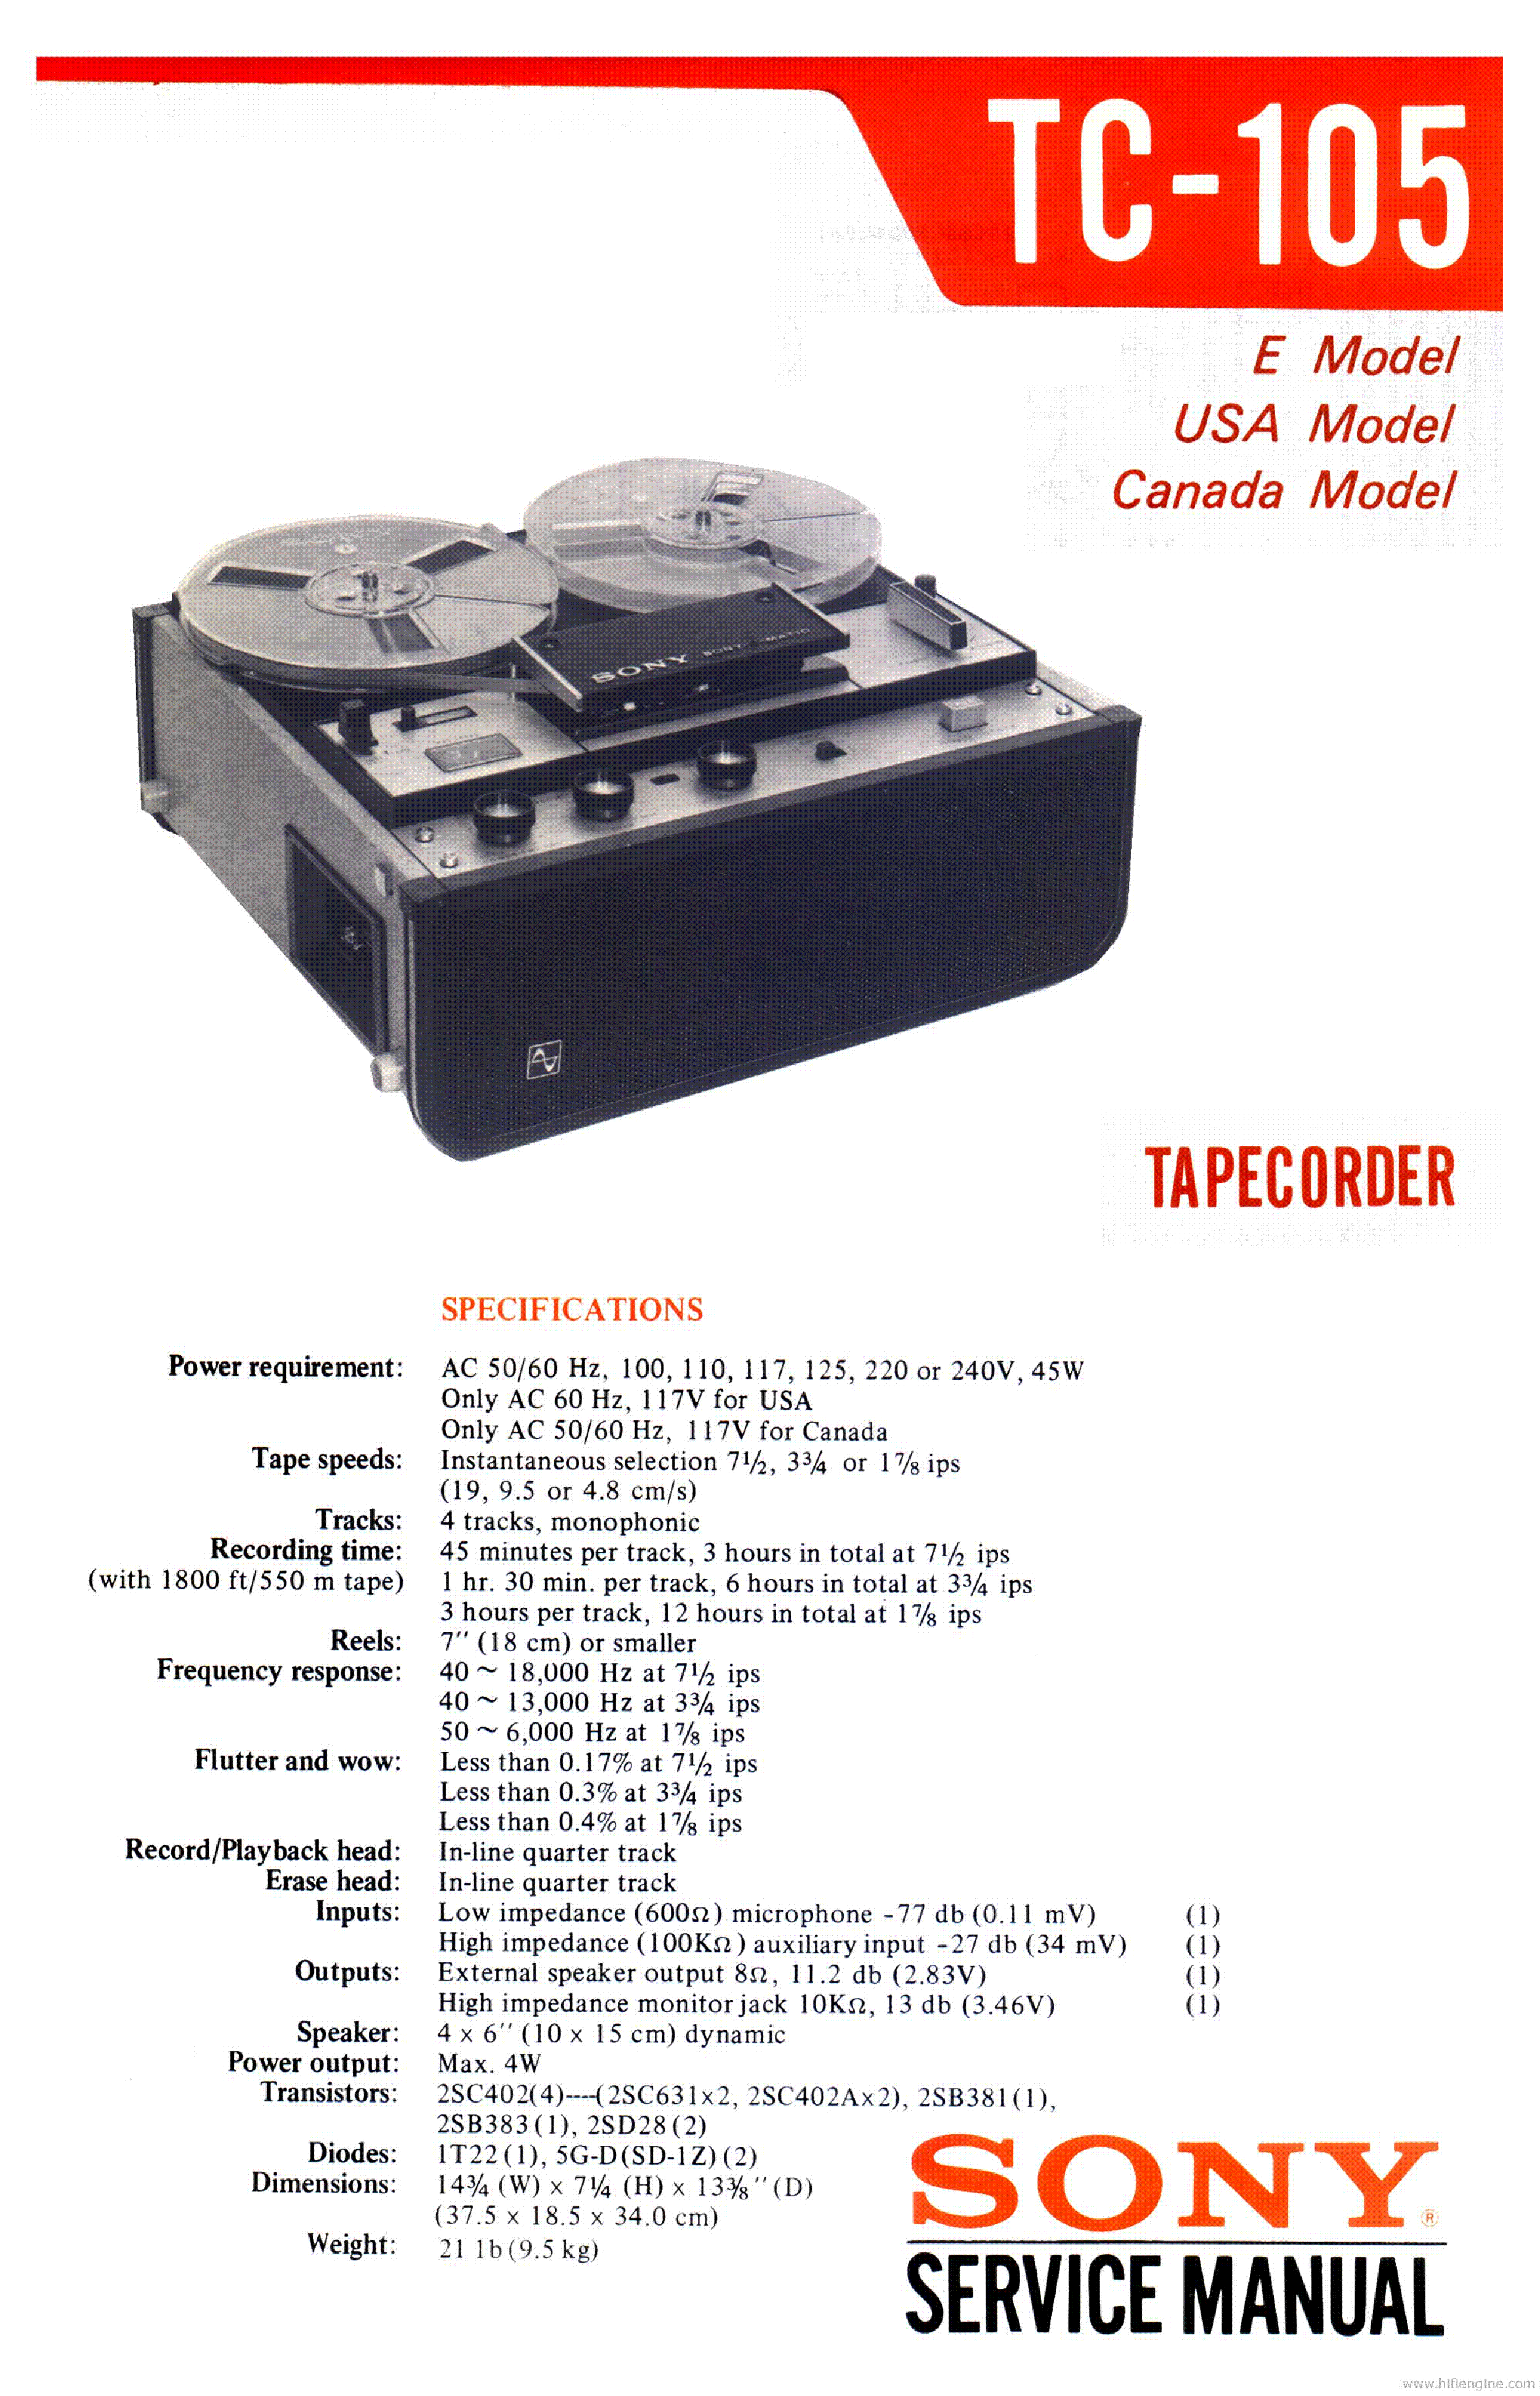 SONY TC-105 SM service manual (1st page)